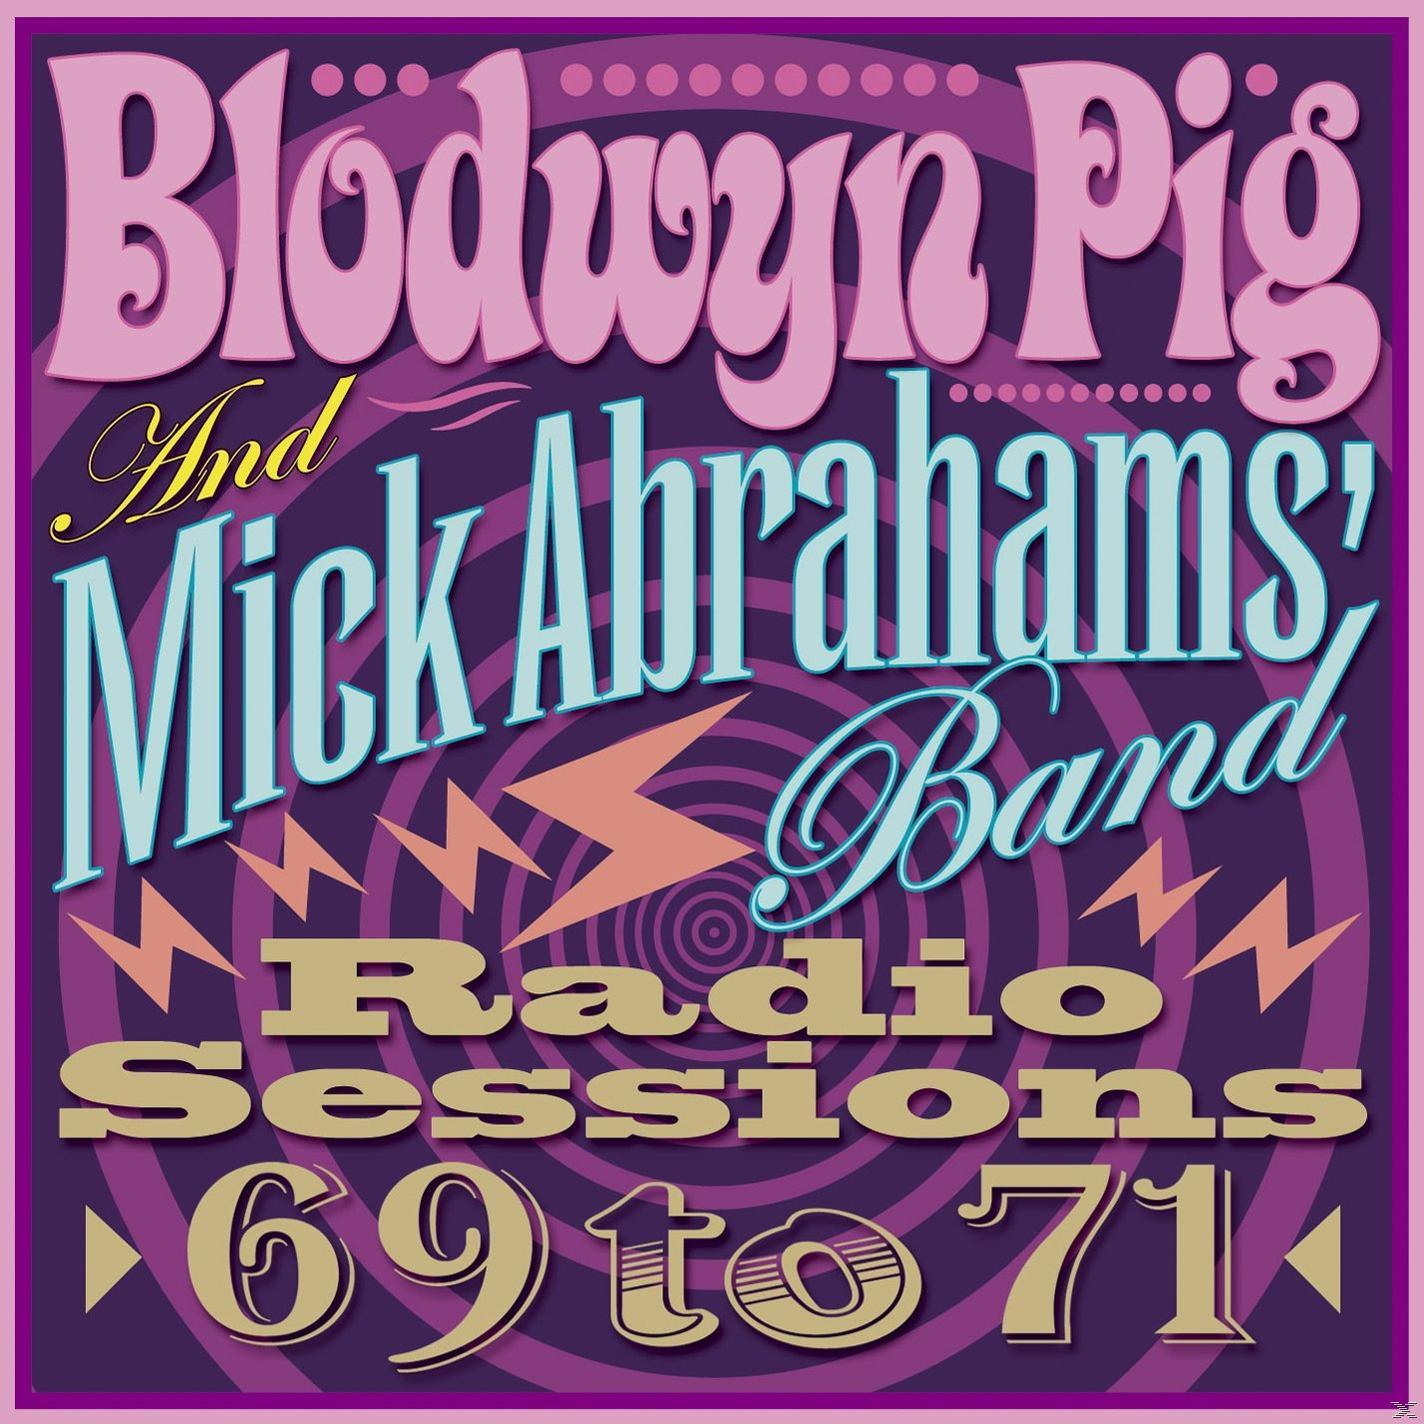 Blodwyn Pig, Mick & Sessions (CD) Radio 1969-1971 Band - Abrahams 